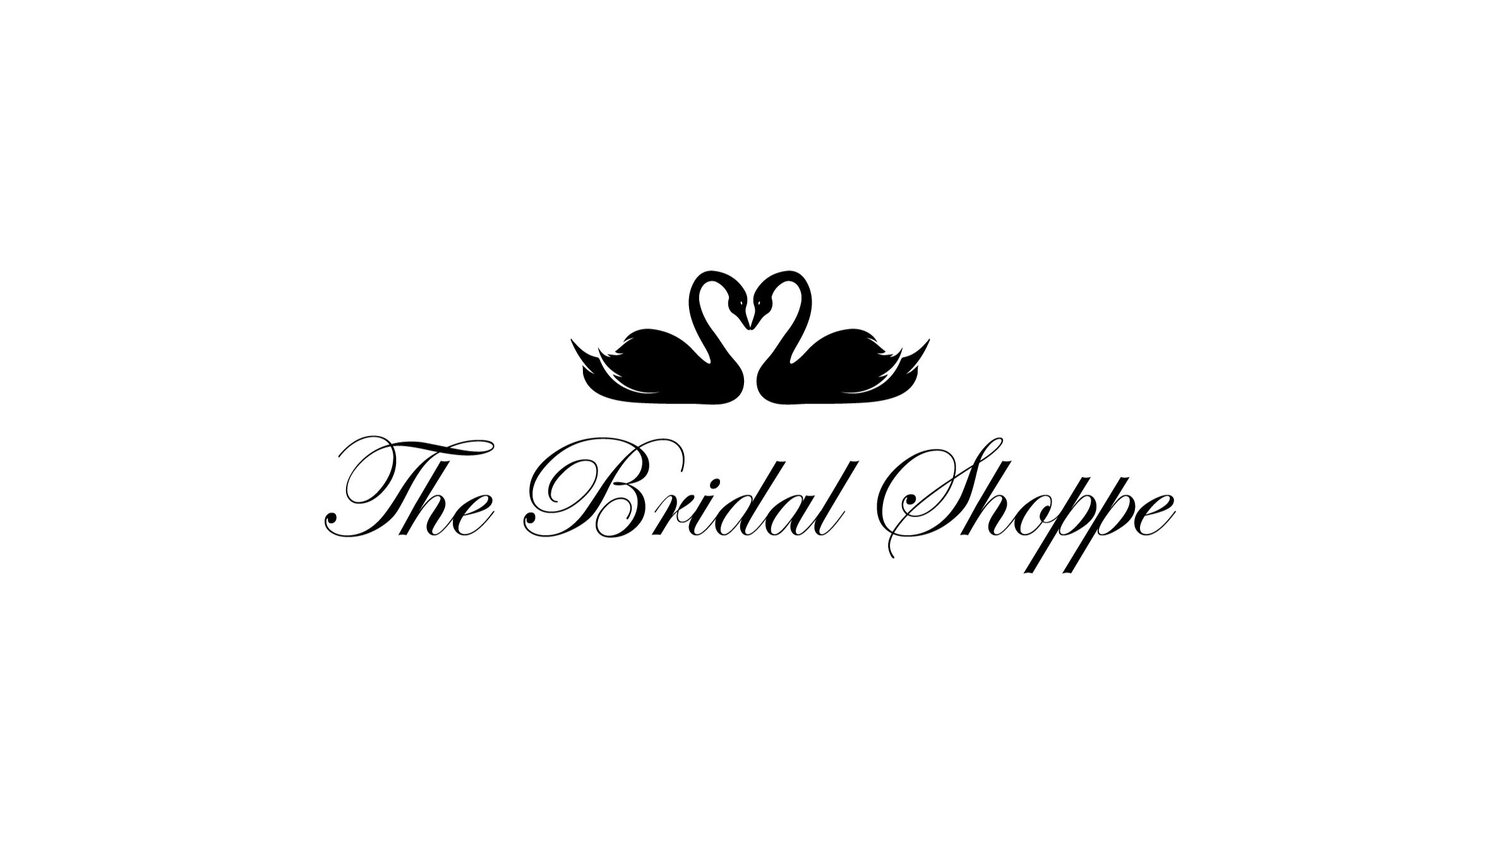 The Bridal Shoppe